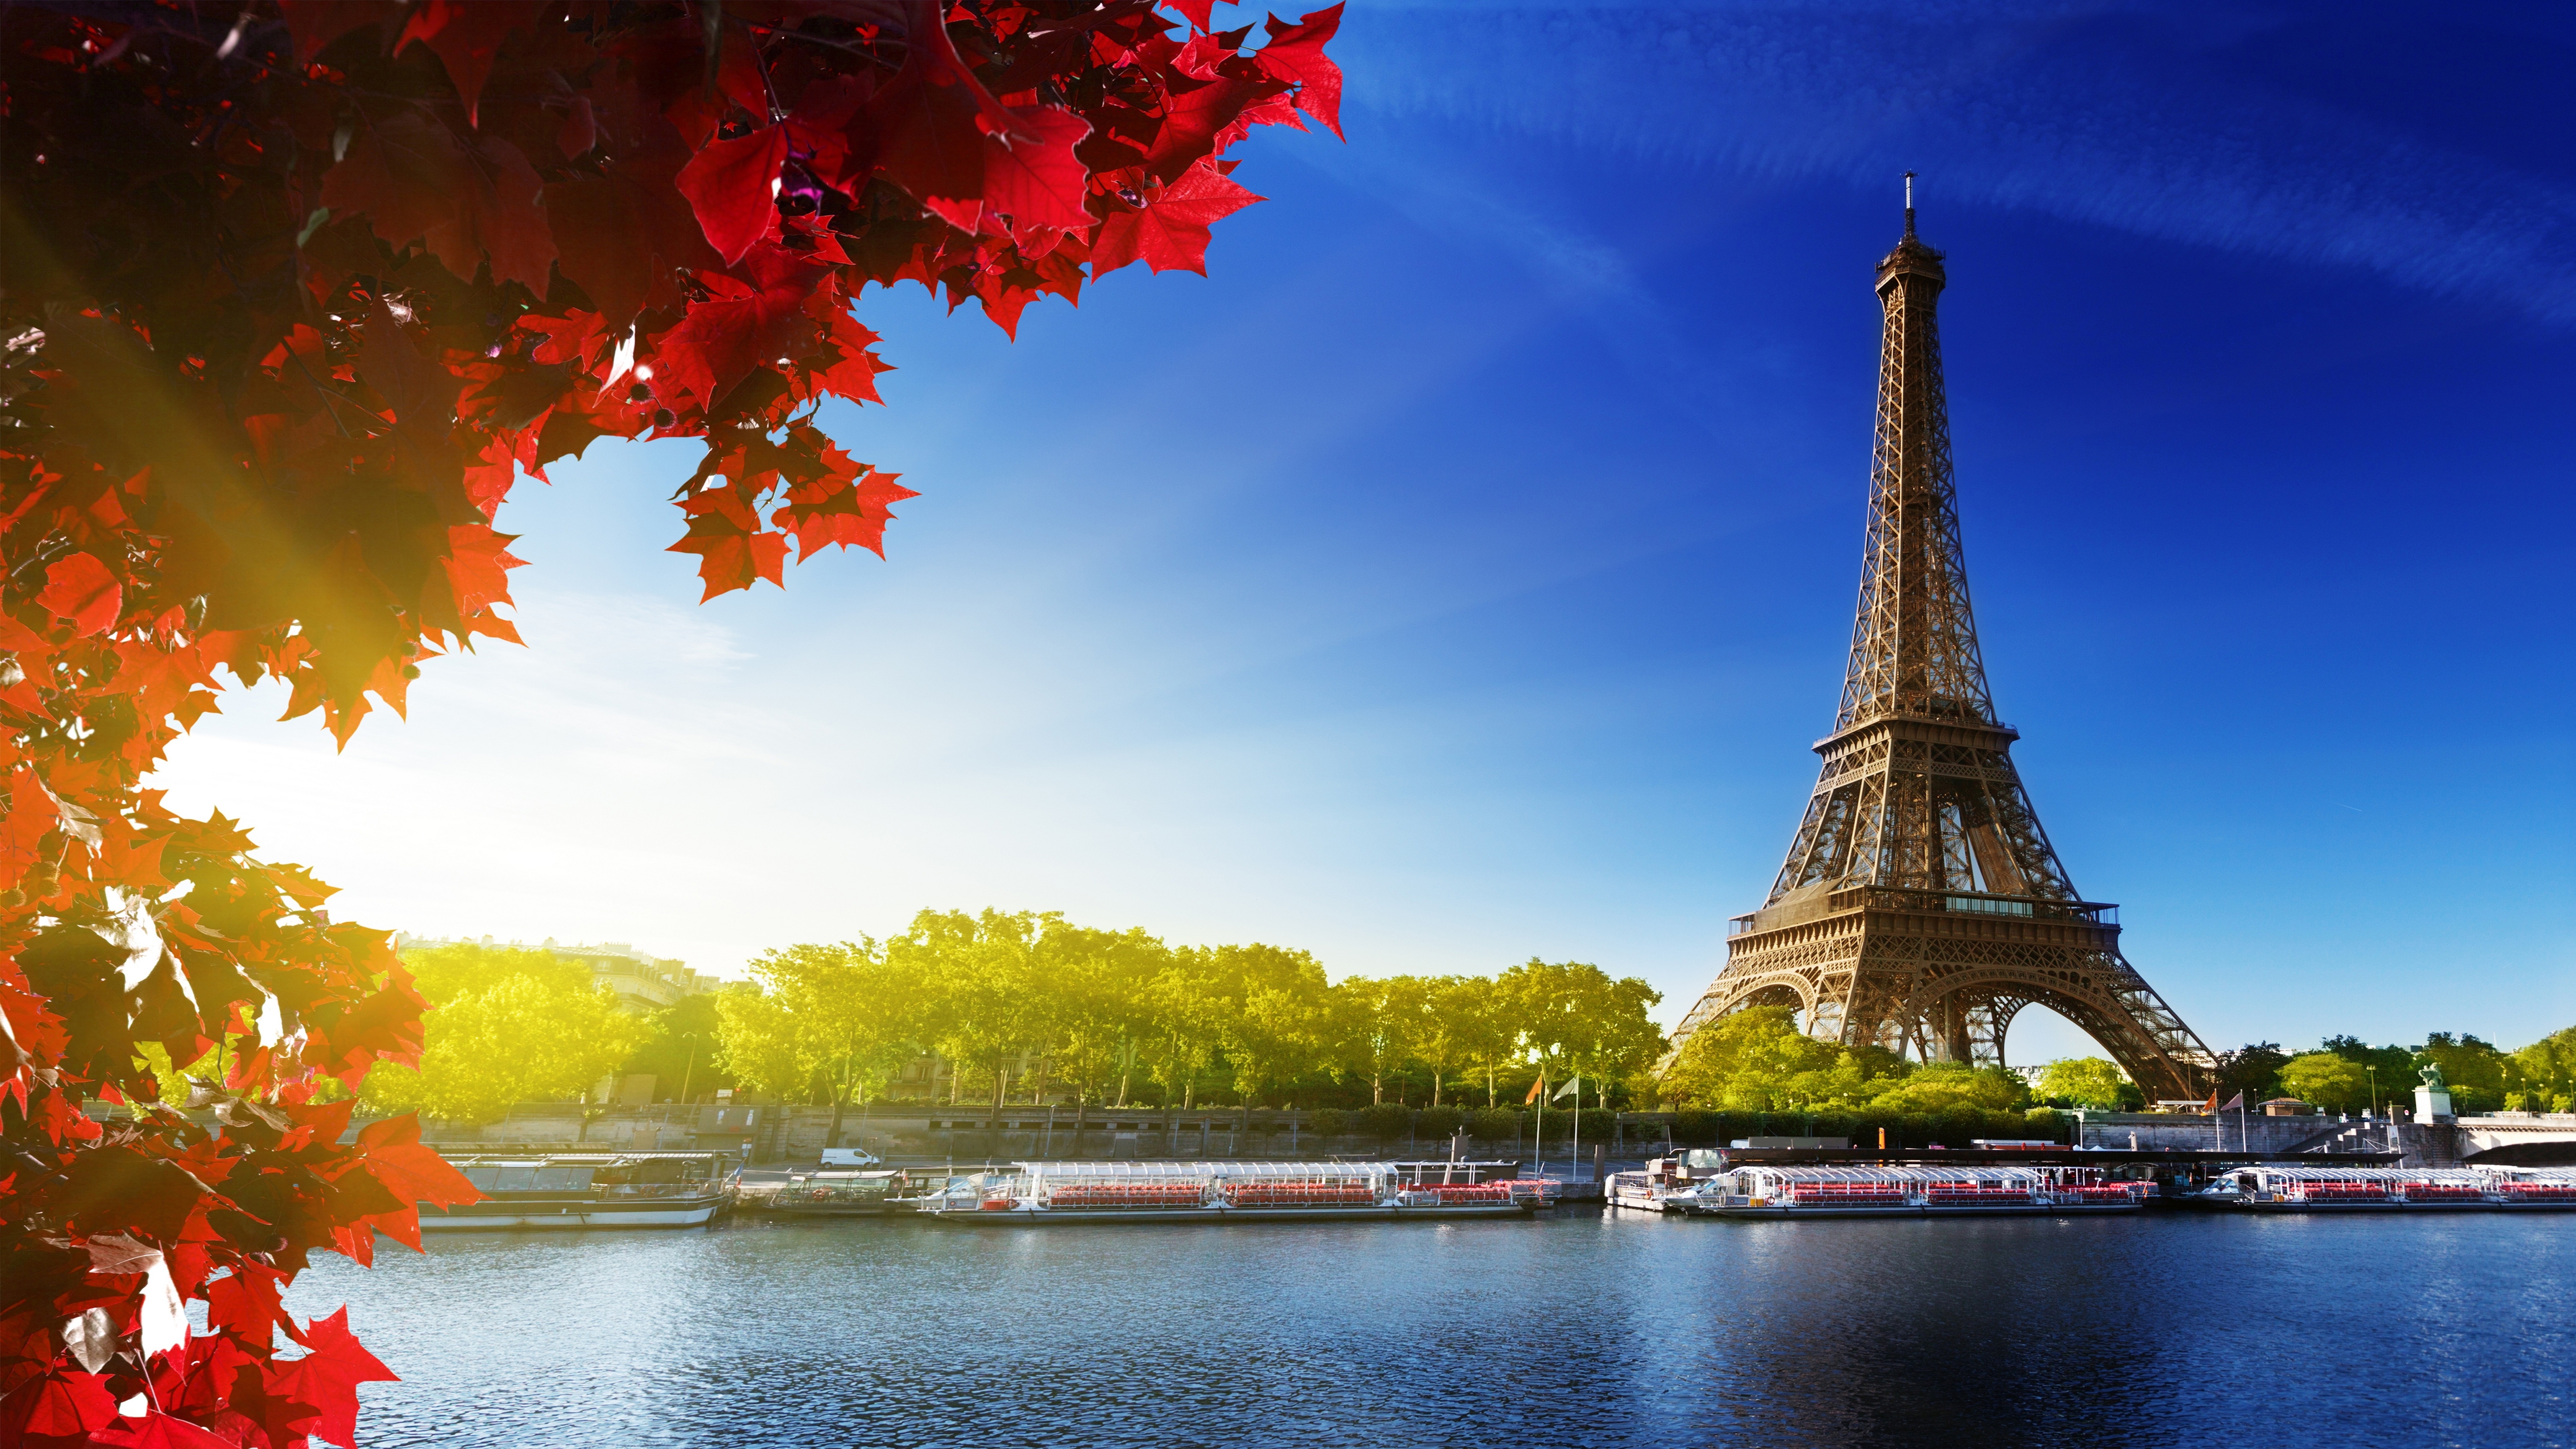 Eiffel Tower Paris for 7680 x 4320 8K Ultra HD resolution